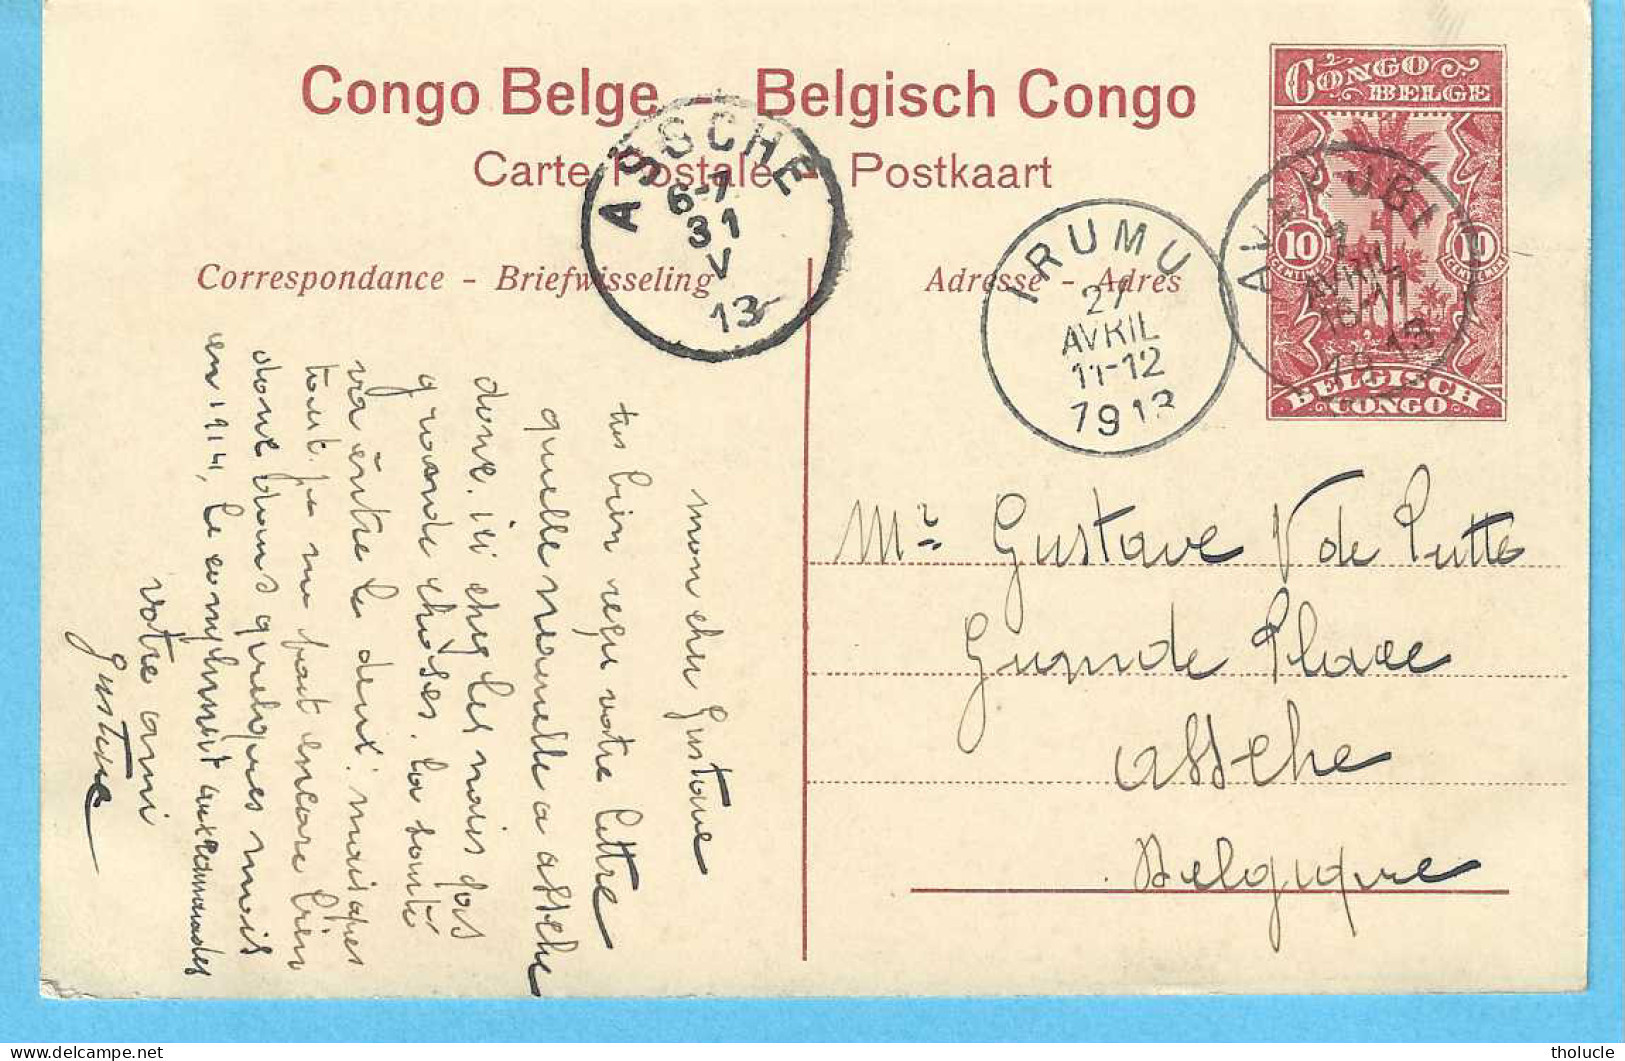 Belgisch Congo Belge-Entier Postal Illustré 10c-1913-Léopoldville-Les Bassins-De Dokken-Cachet-IRUMU-AVAKUBI-1913" - Interi Postali